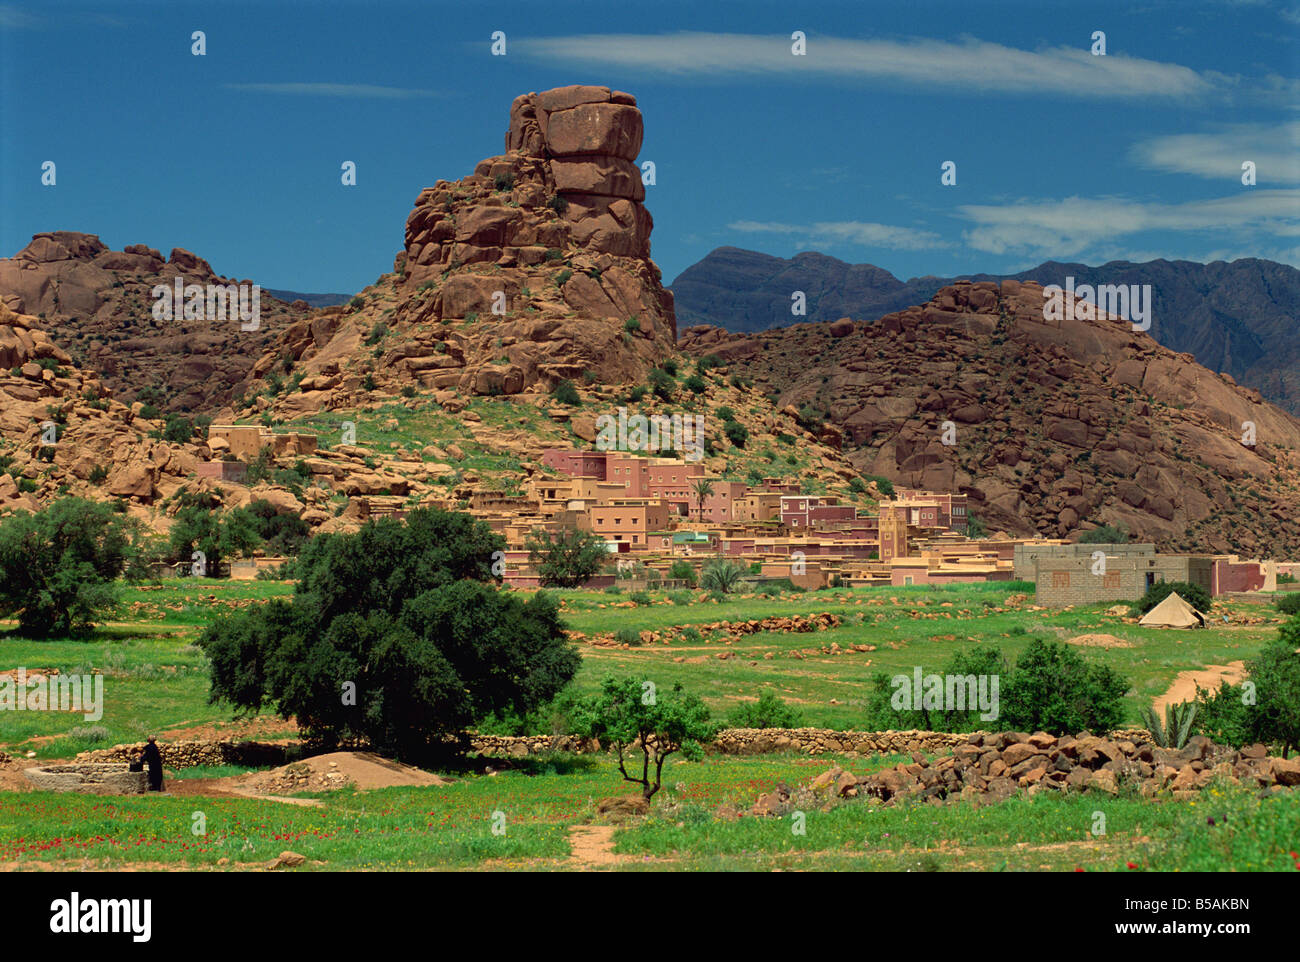 Village of Aguard Oudad and Chapeau de Napoleon rocks near Tafraoute  Morocco Africa L Frost Stock Photo - Alamy